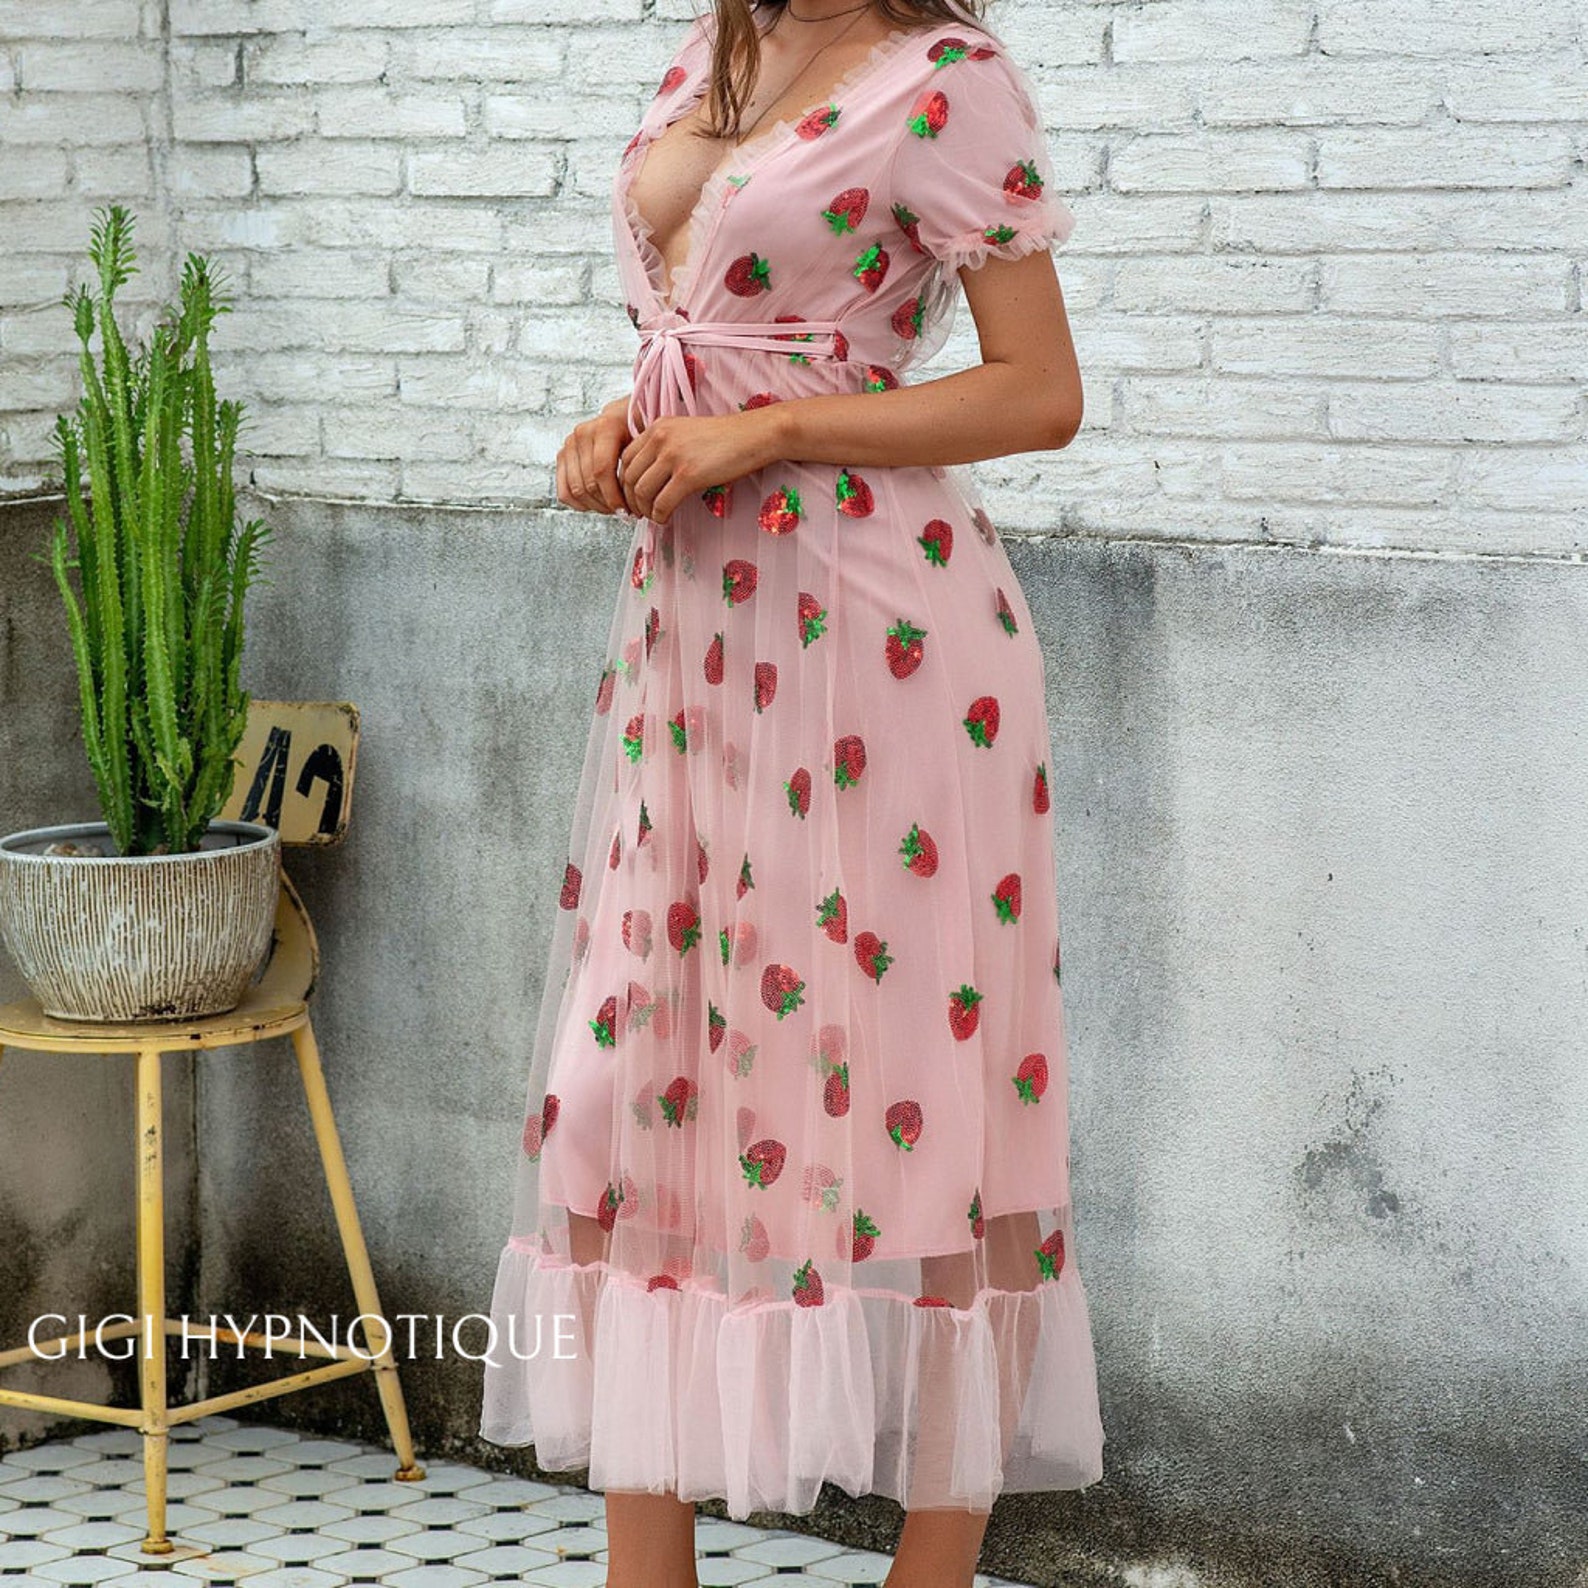 Strawberry Dress Women Cottagecore Princesscore Tulle for - Etsy